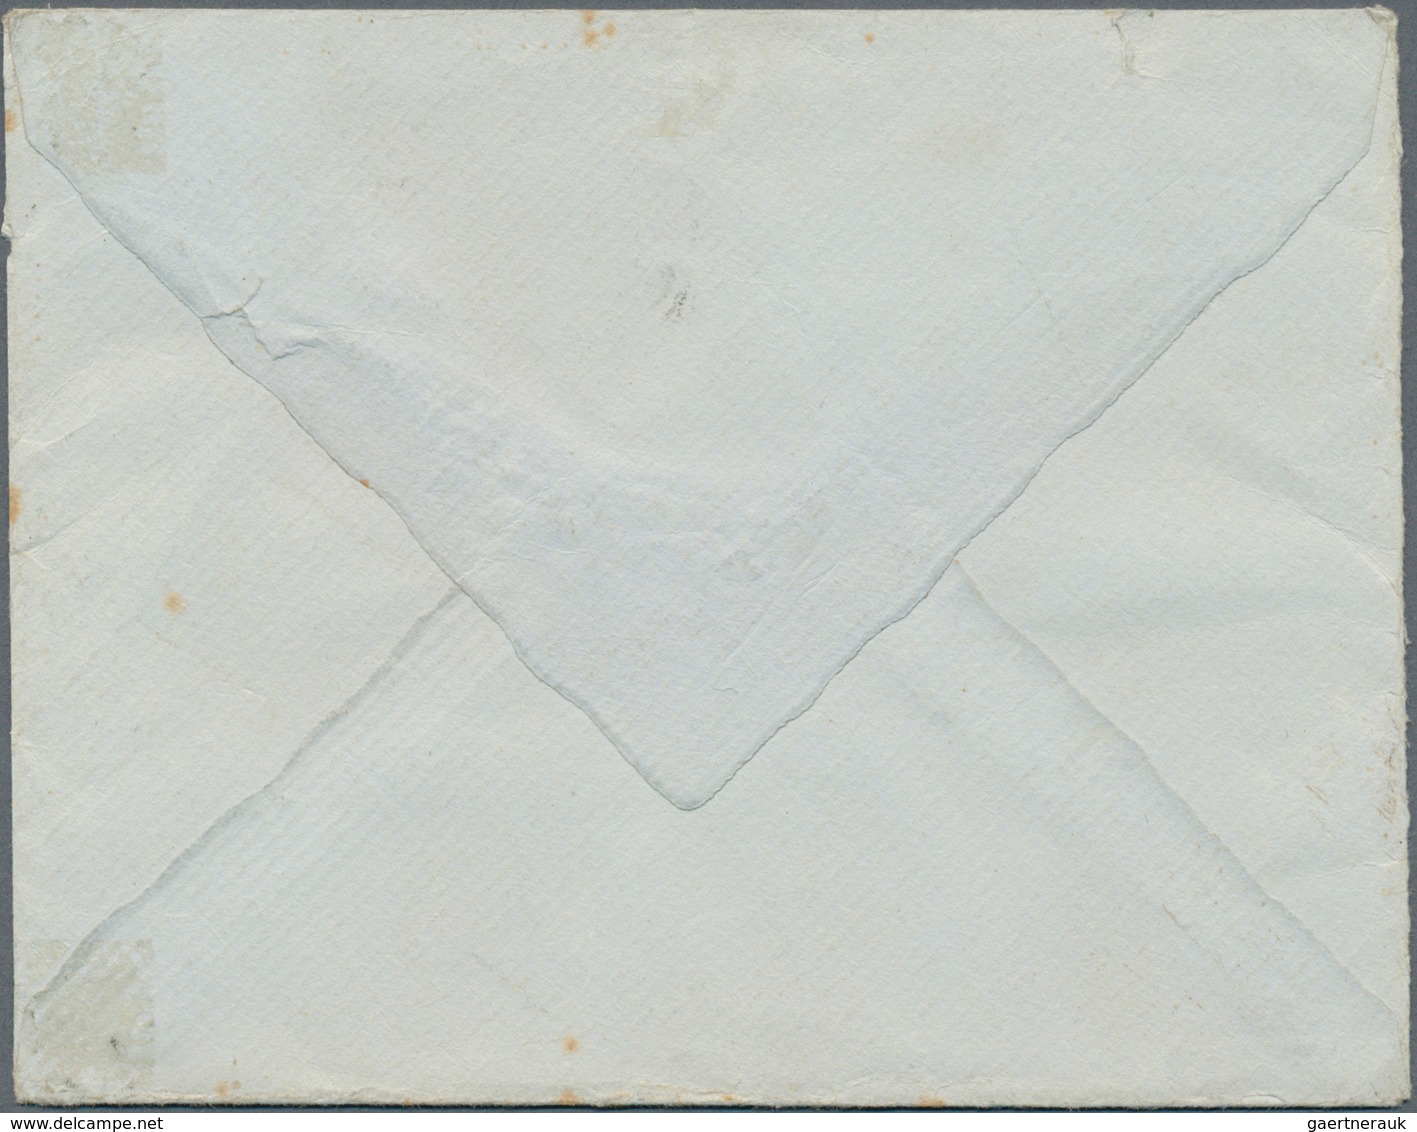 06676 Malaiische Staaten - Perak: 1936, 25c. Dull Purple/scarlet, Single Franking On Airmail Cover From "L - Perak